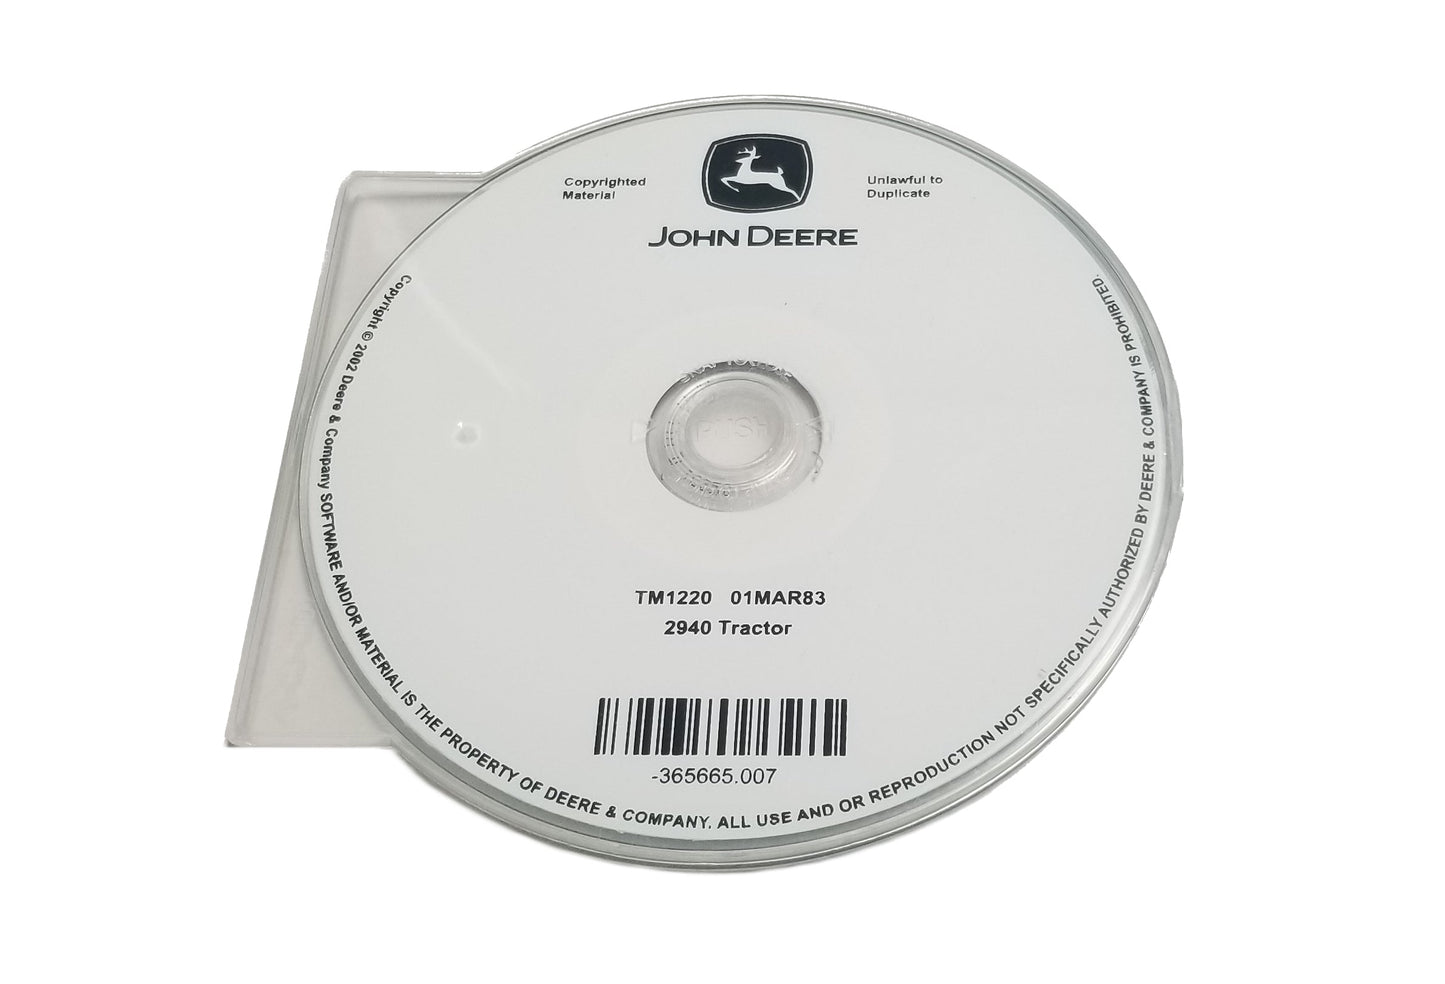 John Deere 2940 Tractor Technical CD Manual - TM1220CD